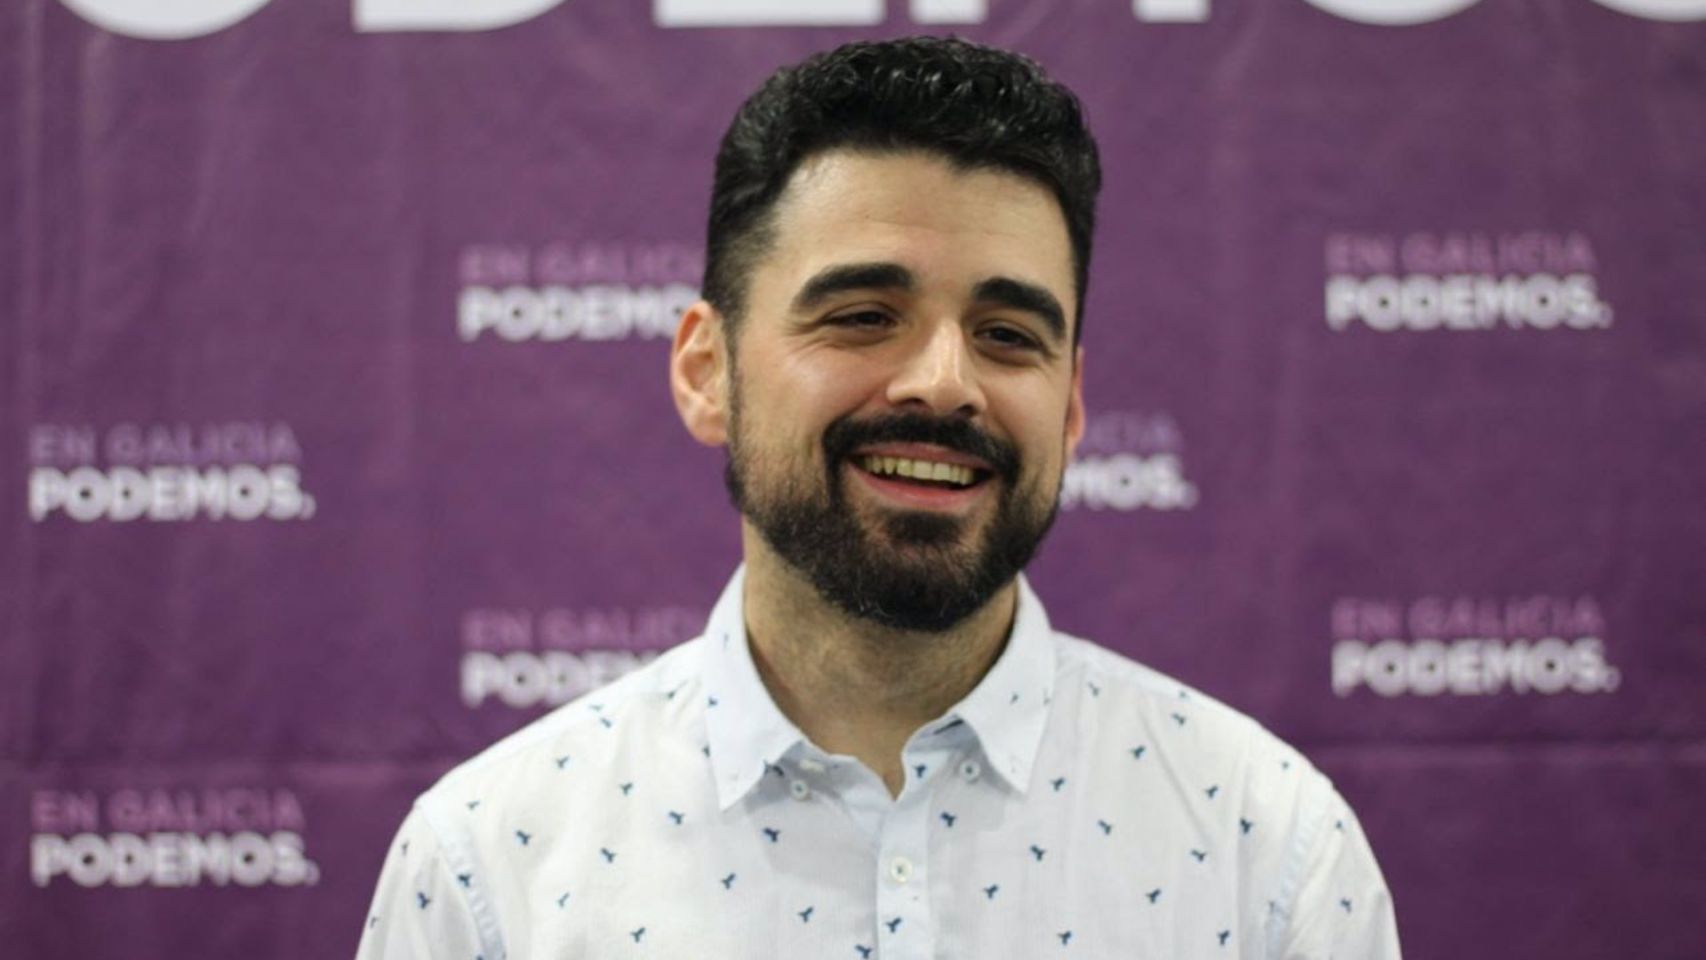 El coordinador nacional de Podemos Galciia, Borja San Ramón